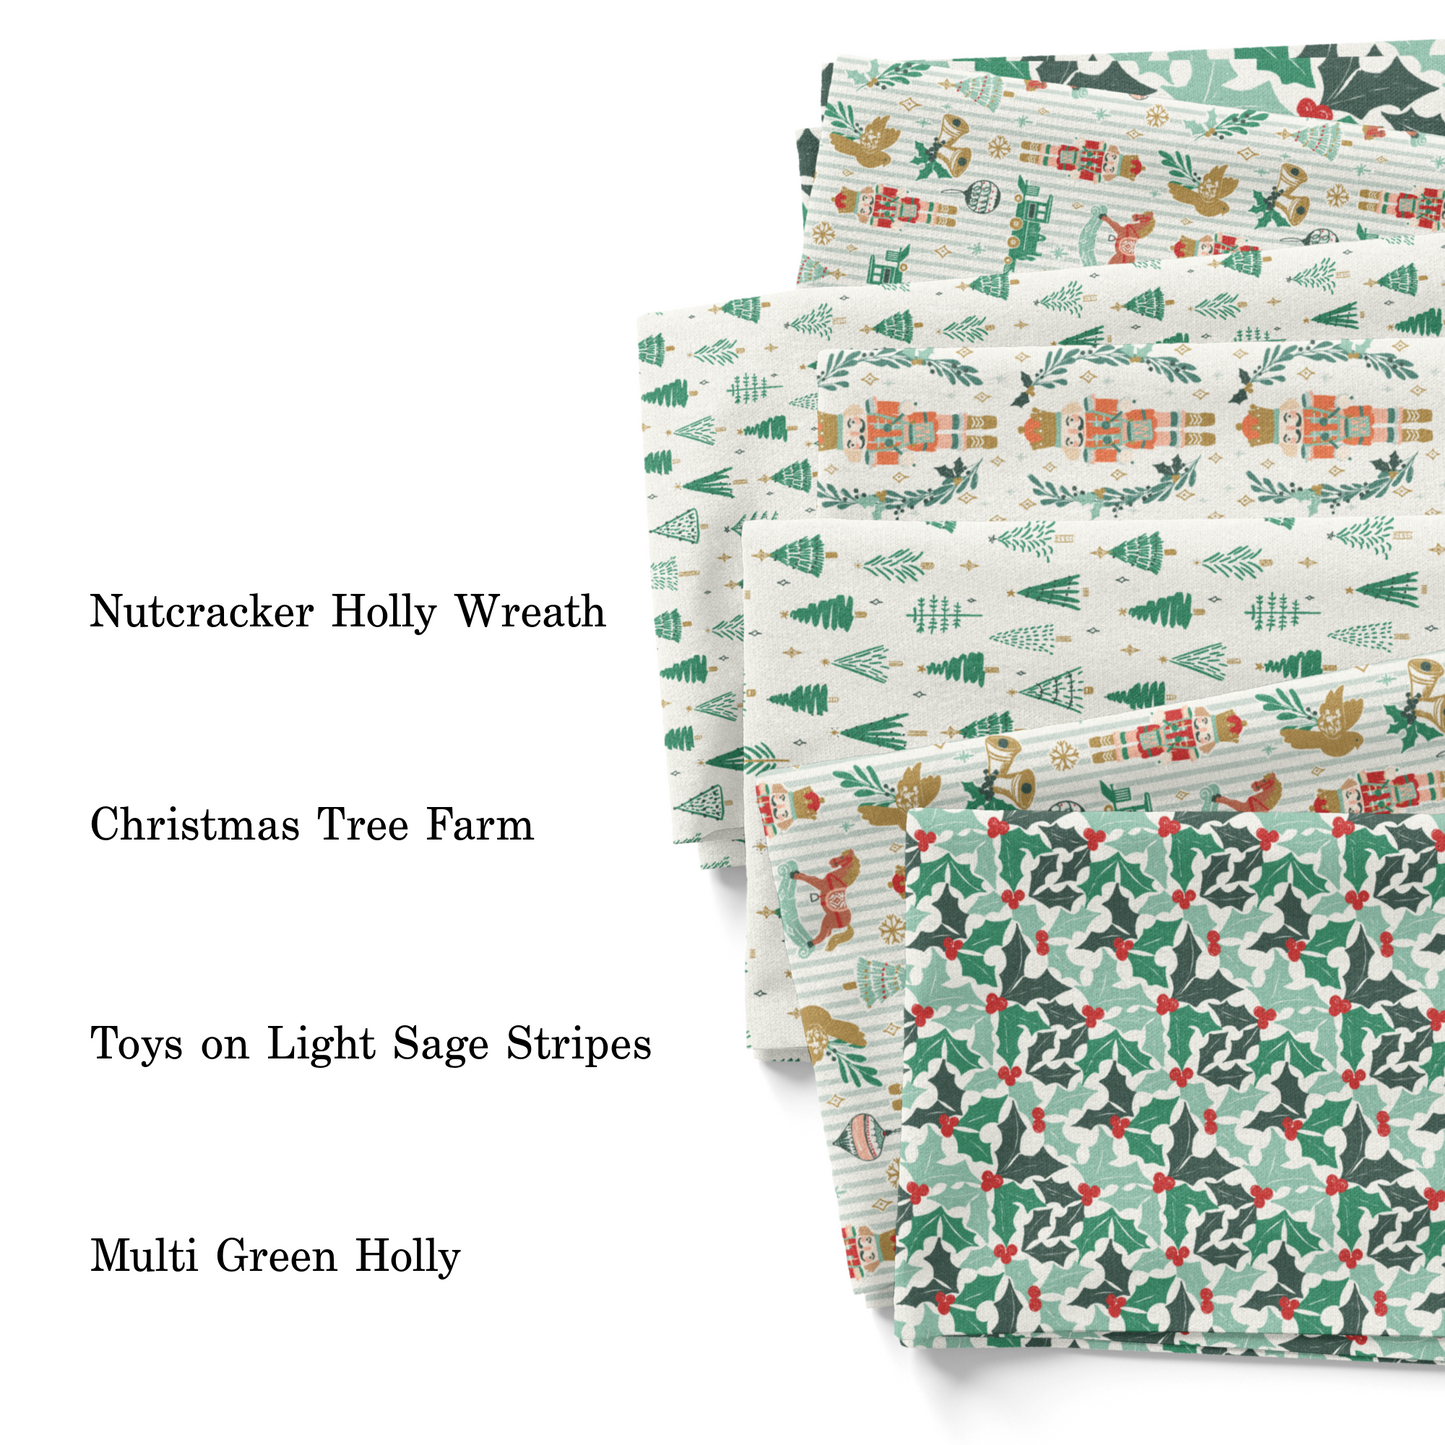 Hufton Studio Christmas fabric swatches.